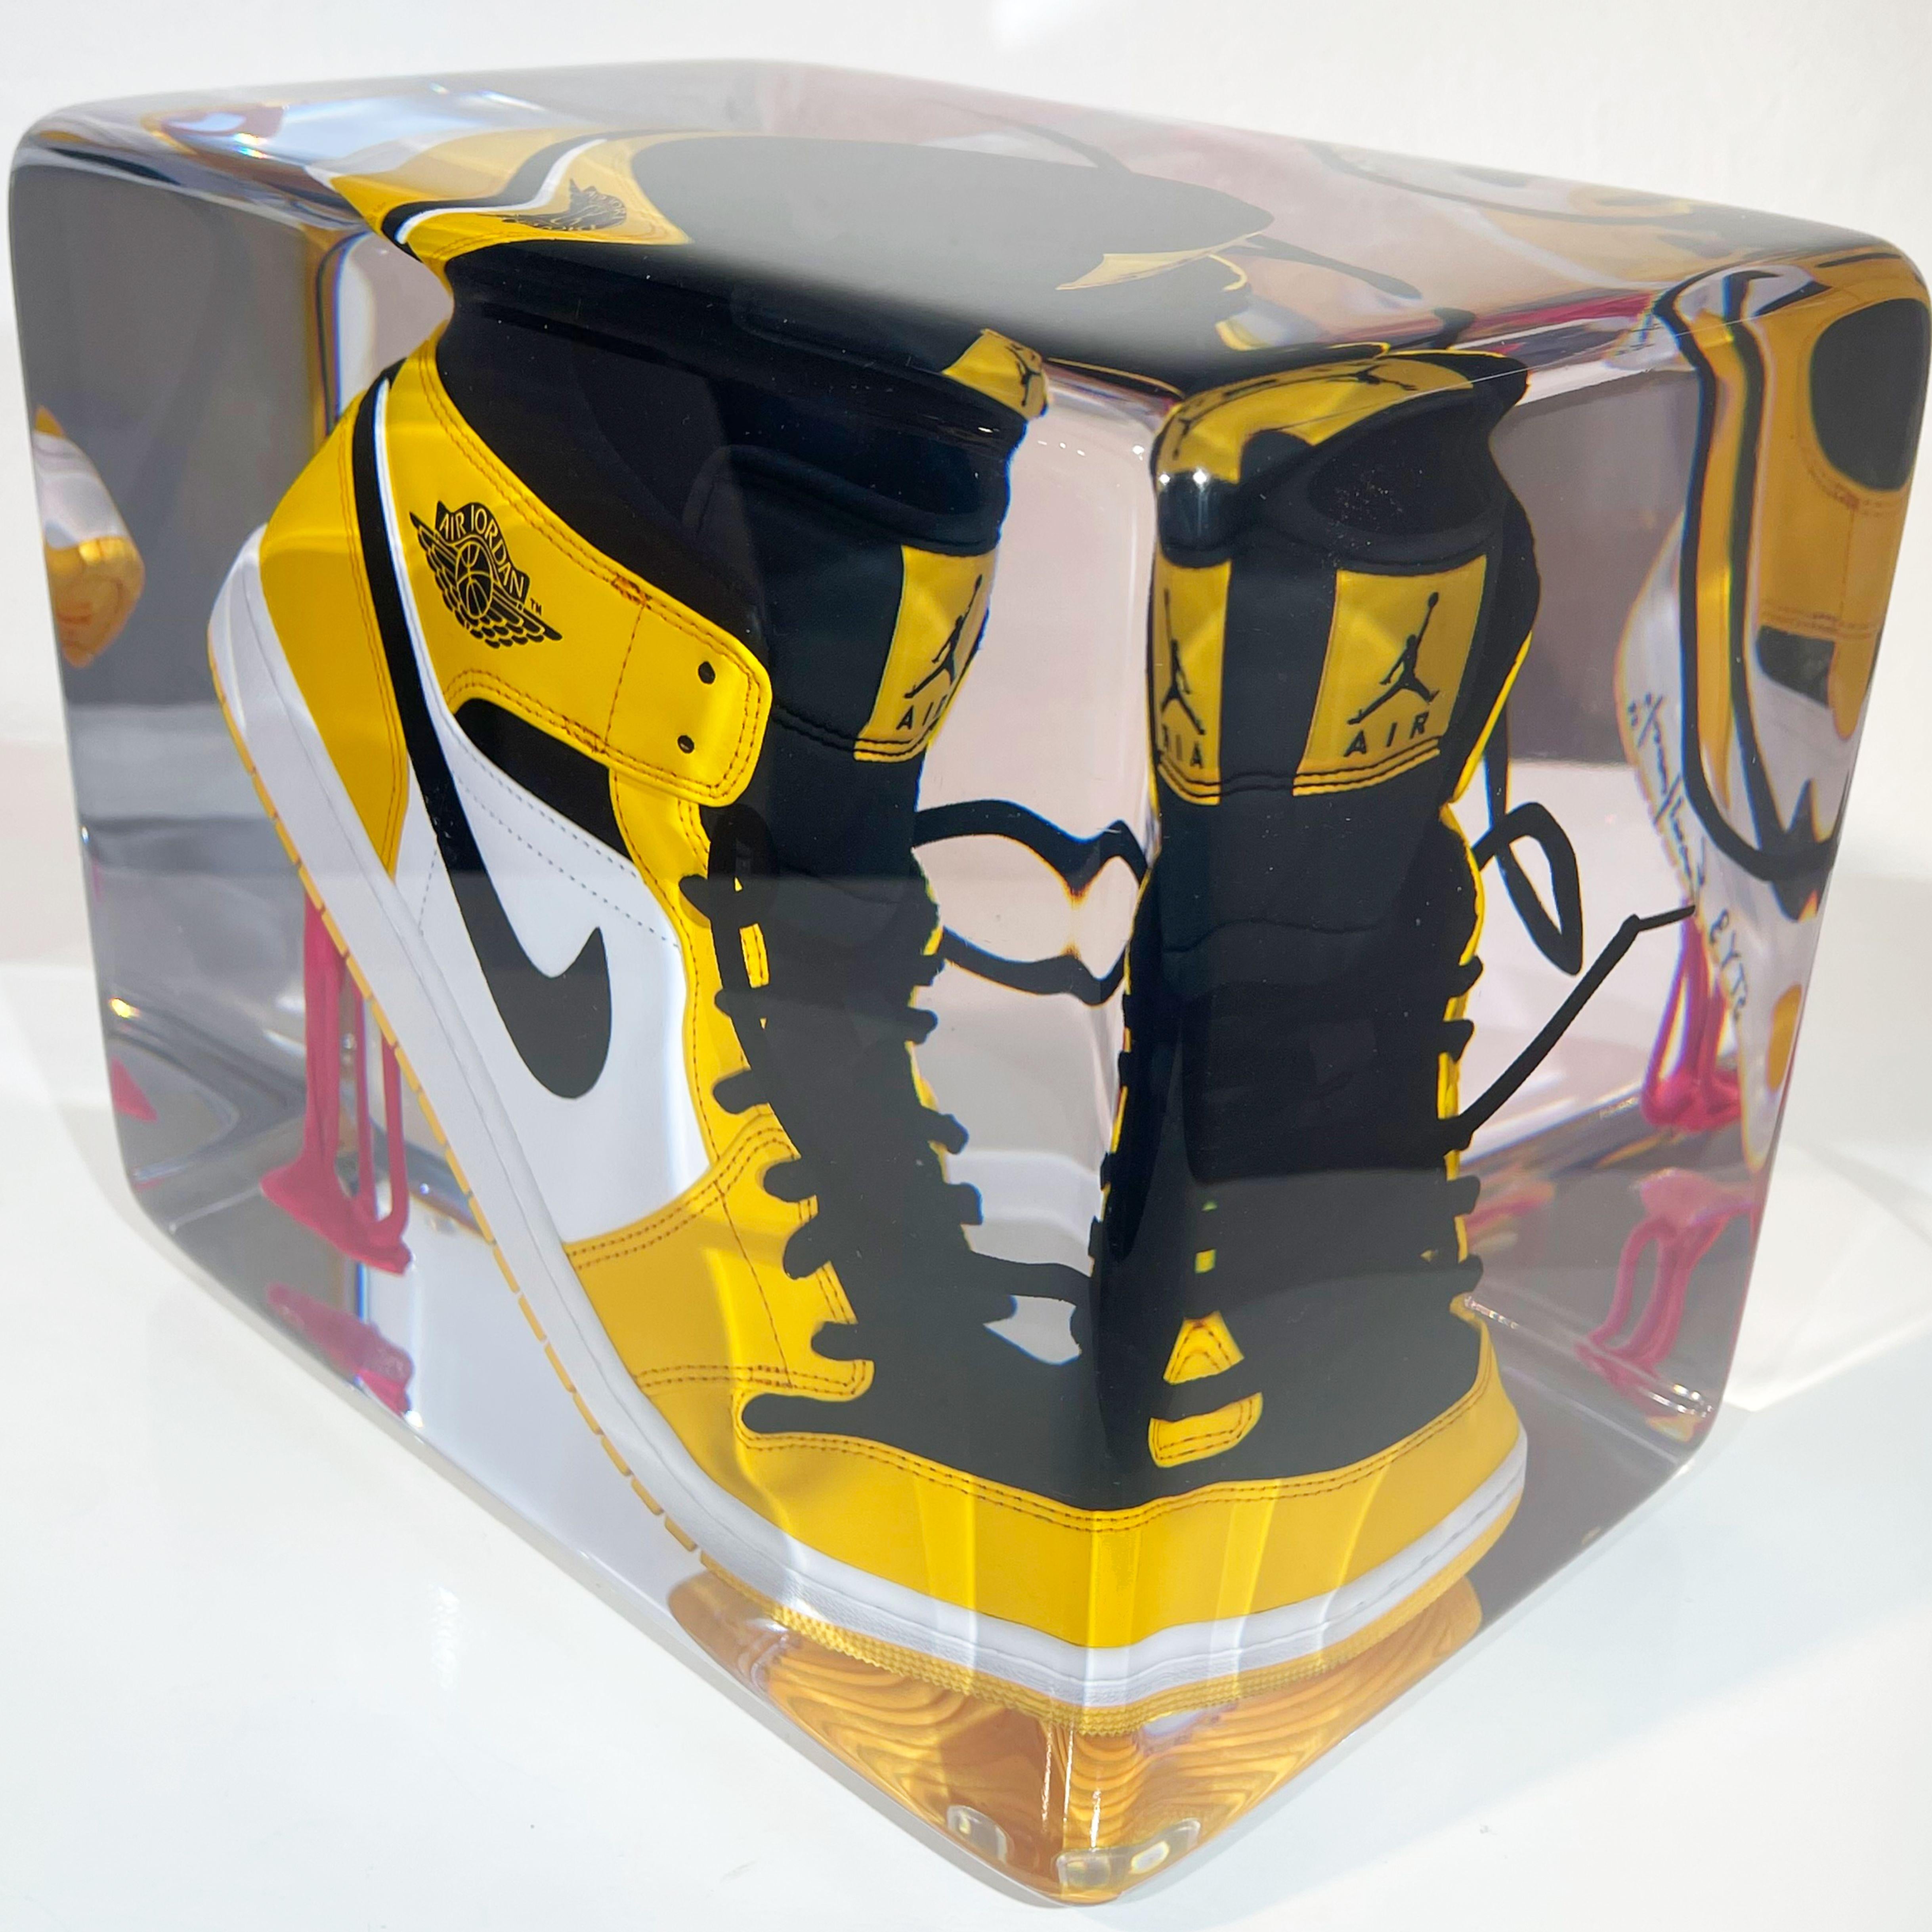 Sneakers & Gum Taxi Gelbe Ton-Skulptur Edition 03/20 (Pop-Art), Sculpture, von Emmanuel Meneses